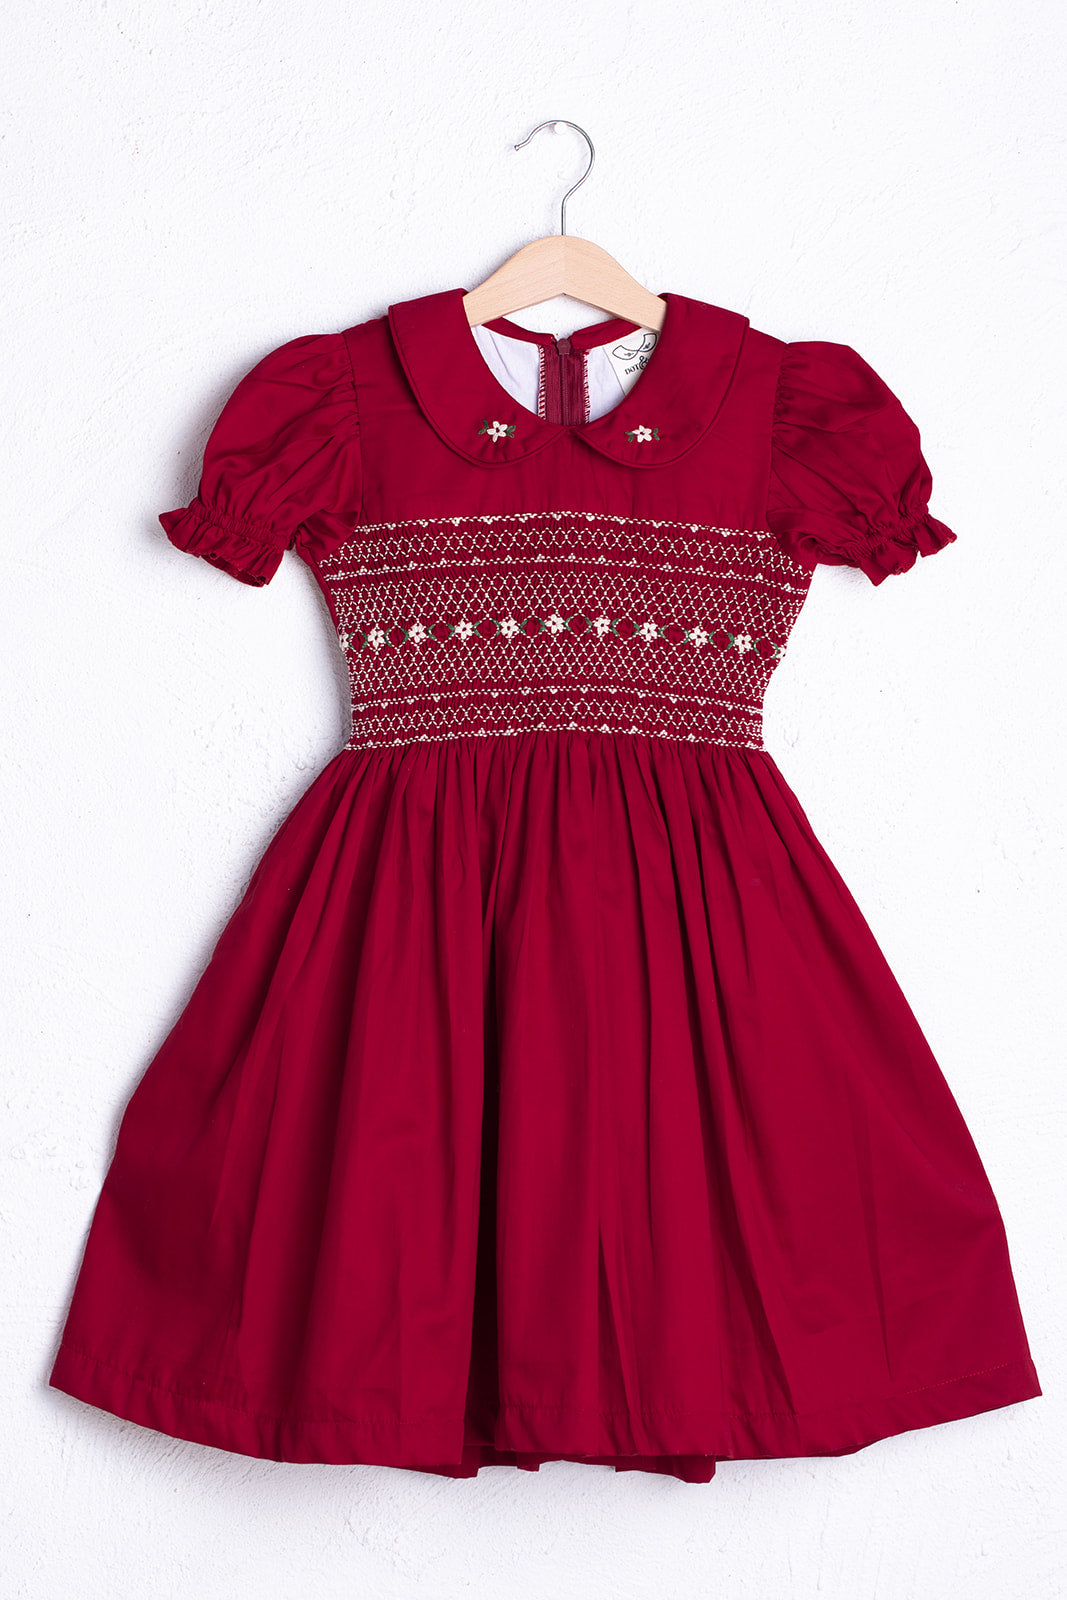 Dot & Mila Red Smocked Dress Size 4